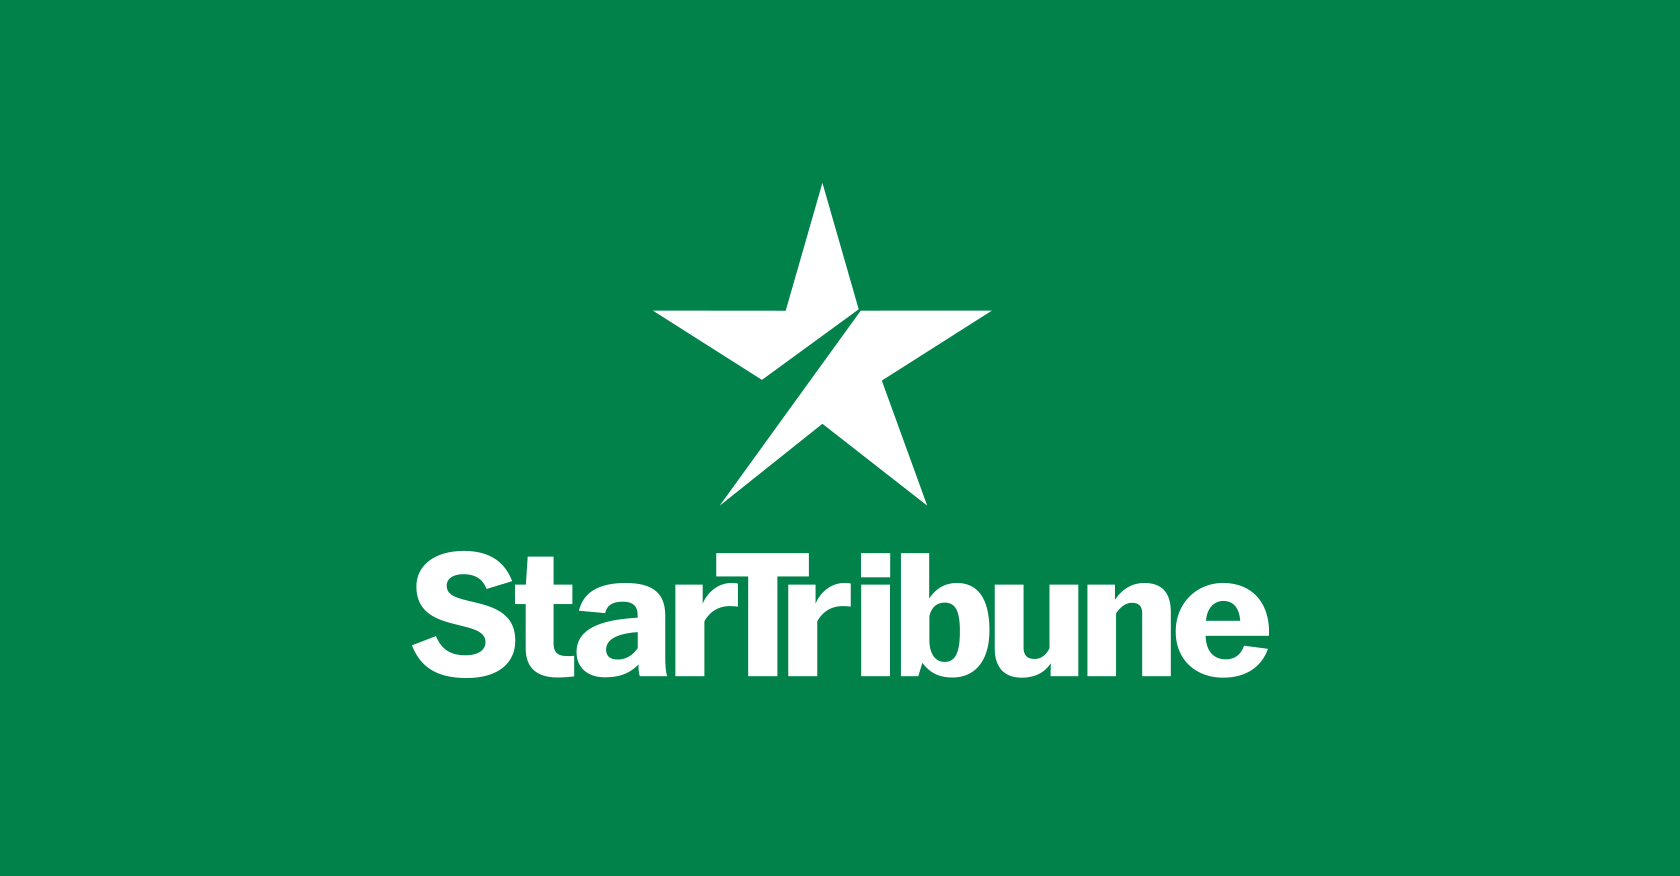 Campaign stunt, ads bring California recall into new phase - Minneapolis Star Tribune